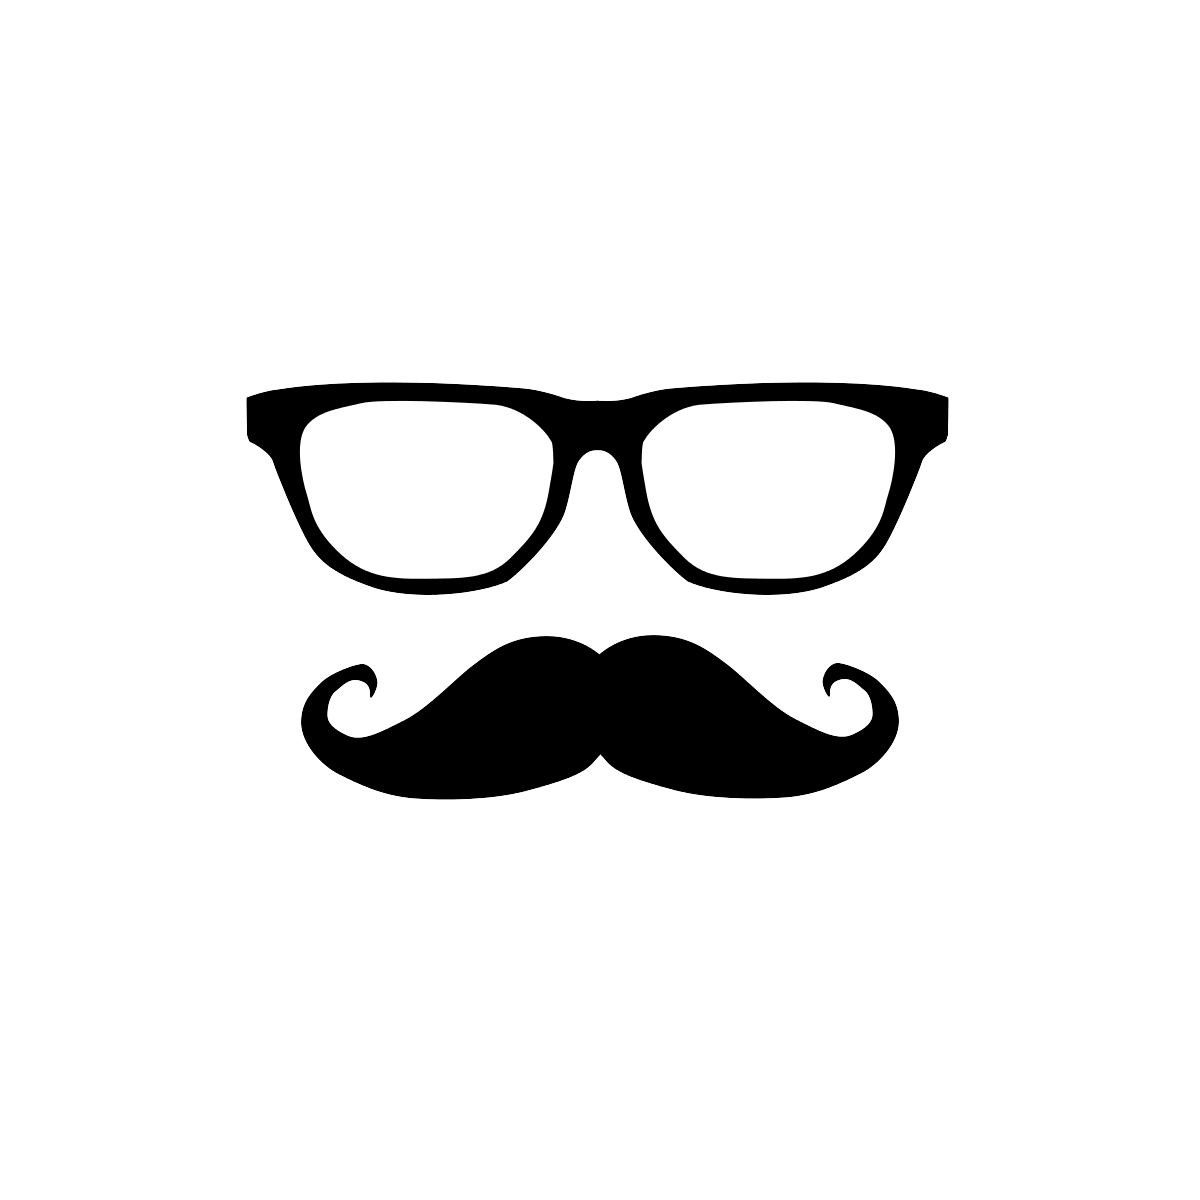 Hipster glasses clip.